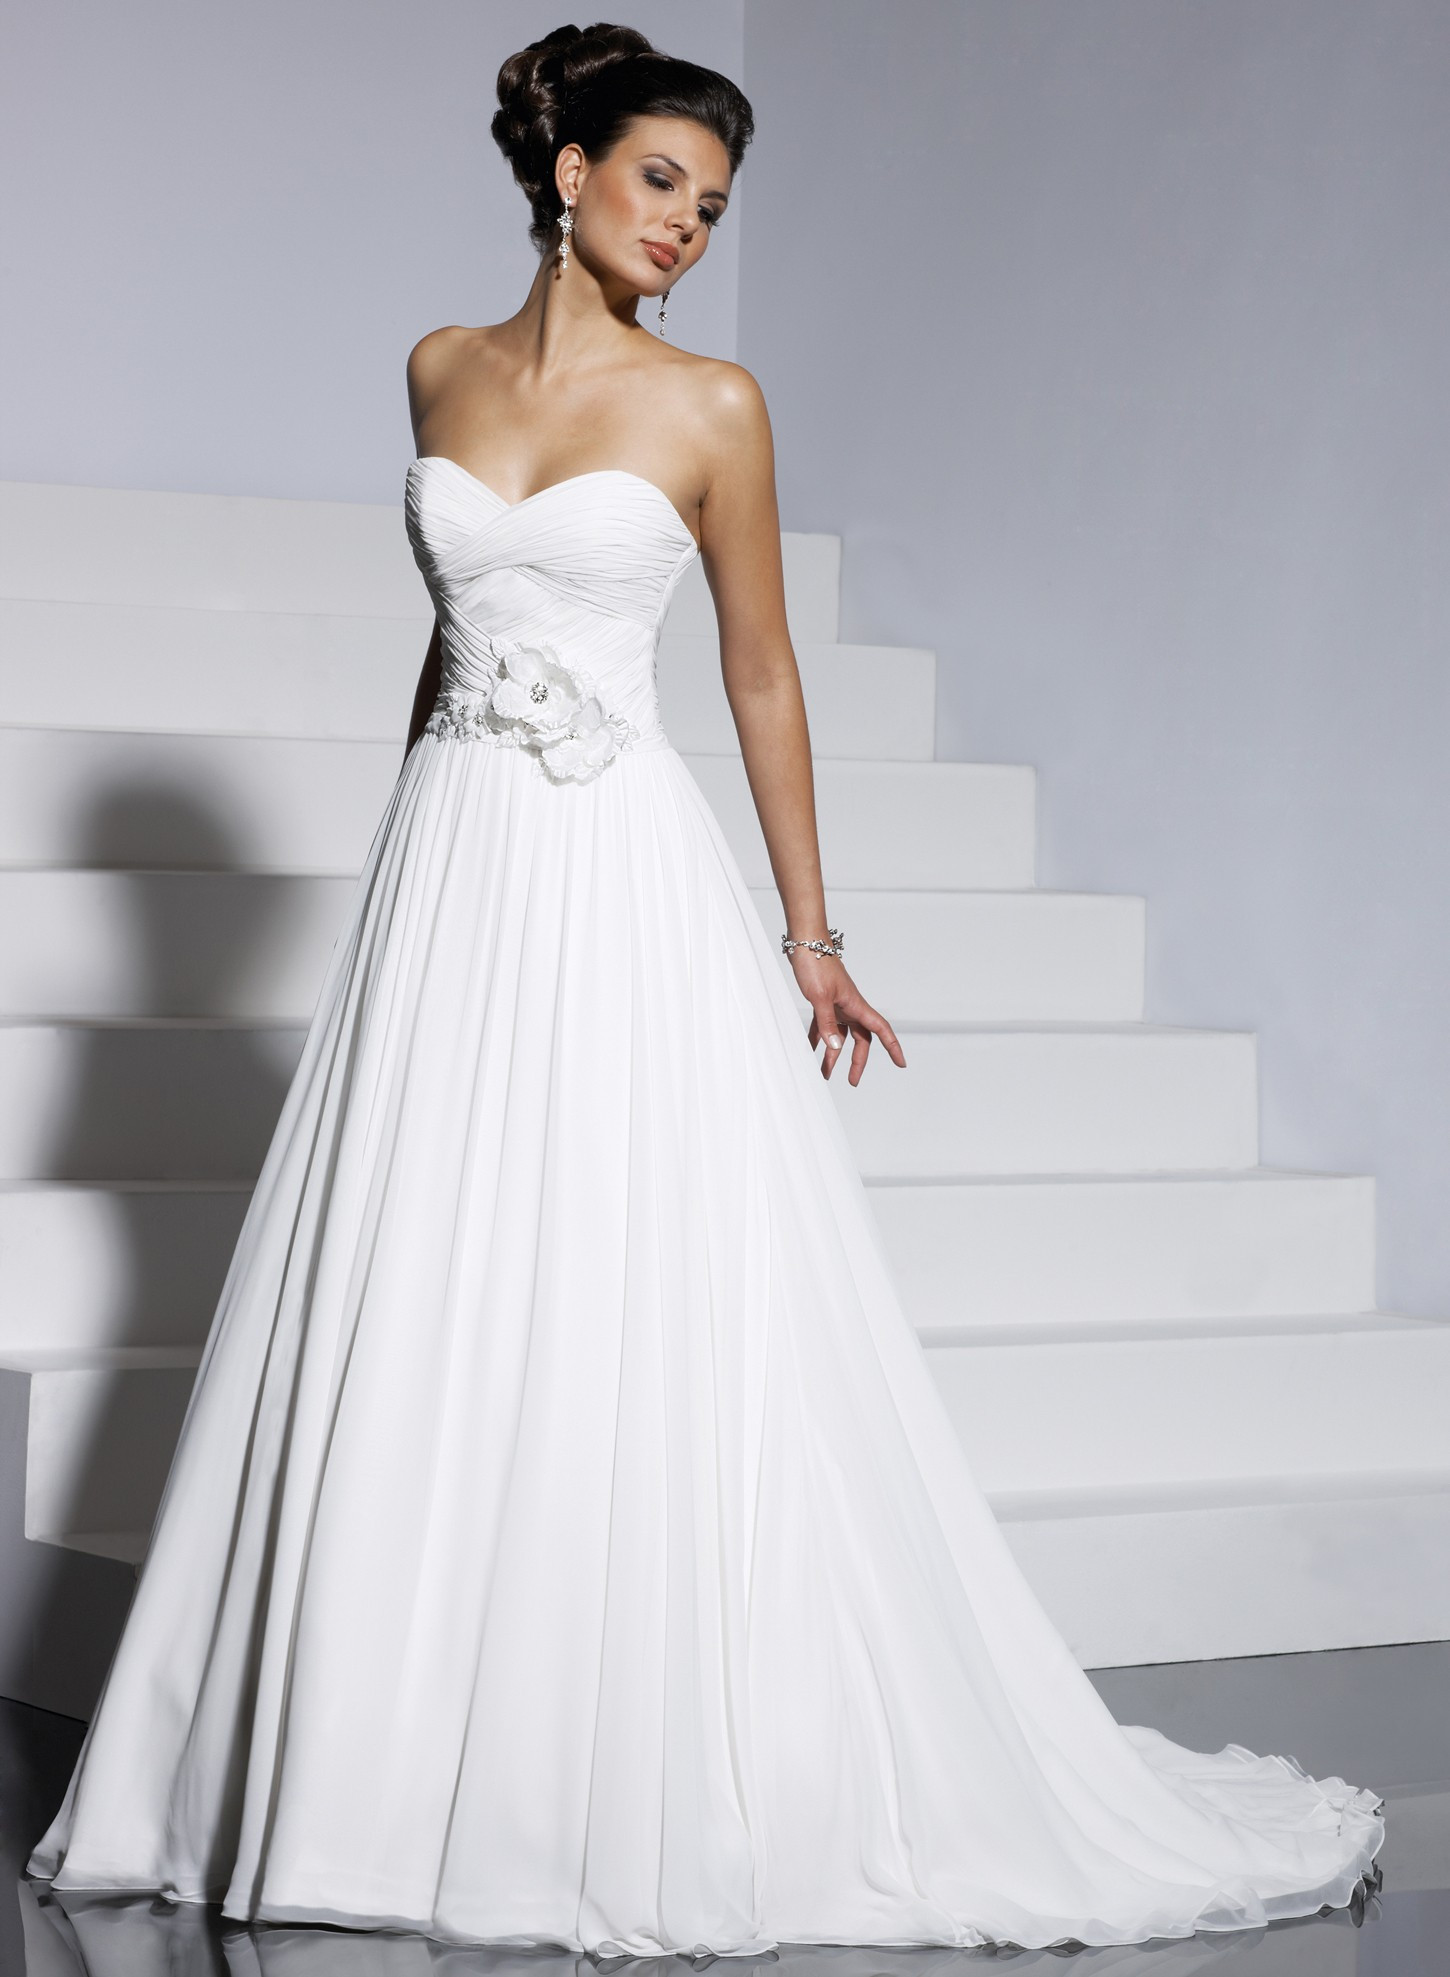 Non Strapless Wedding Dresses
 Non strapless wedding dress – 1 – Wedding Dresses